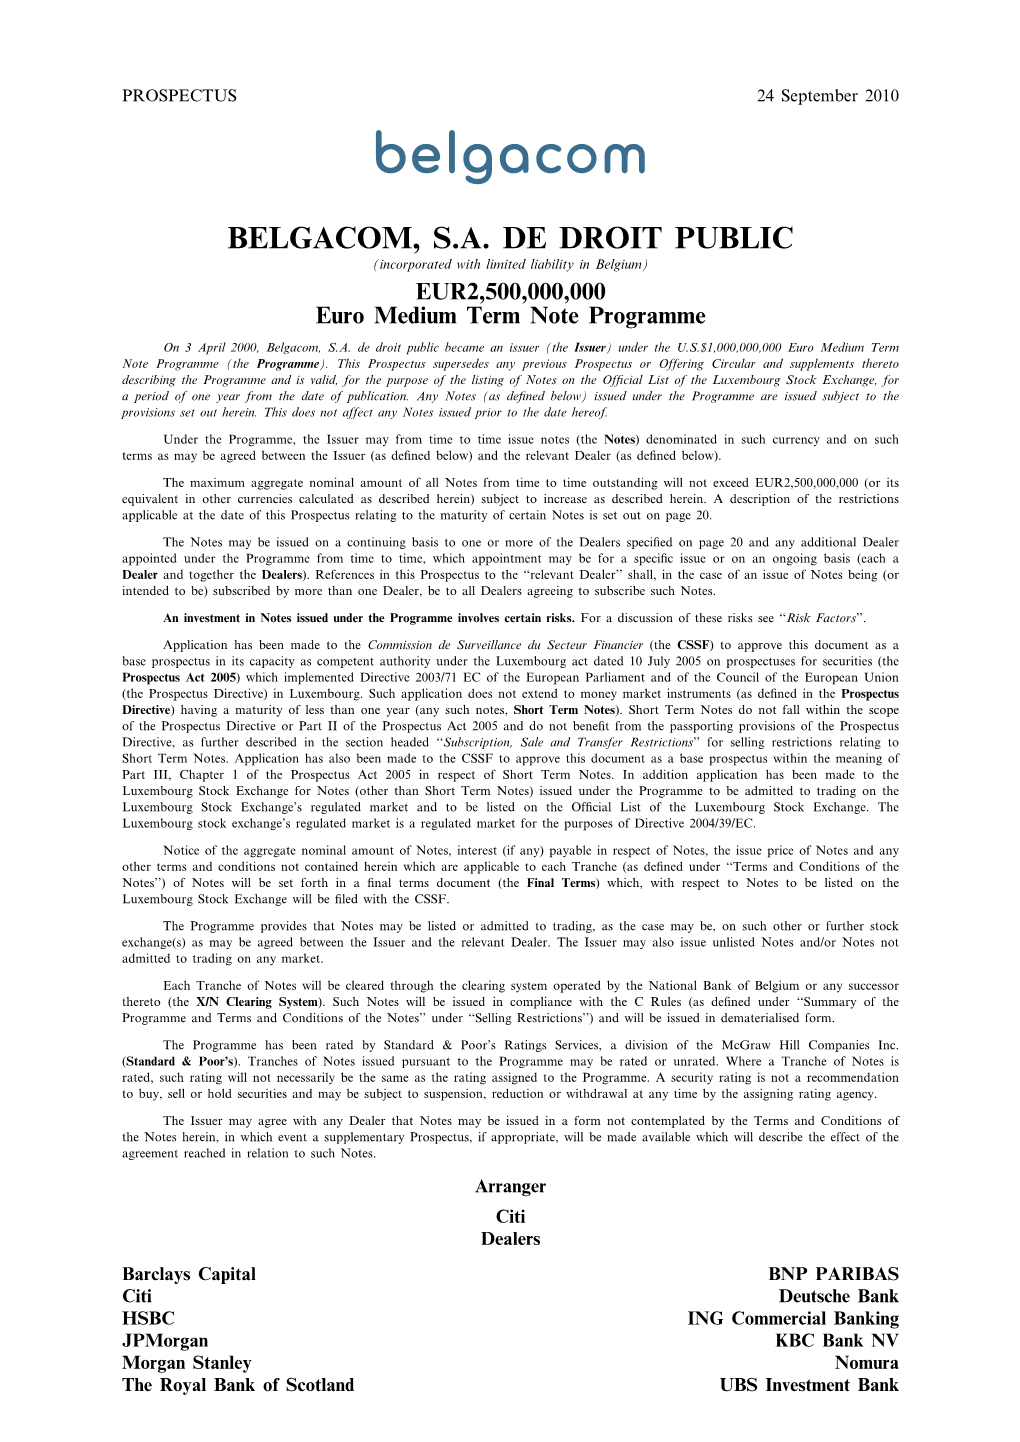 BELGACOM, S.A. DE DROIT PUBLIC (Incorporated with Limited Liability in Belgium) EUR2,500,000,000 Euro Medium Term Note Programme